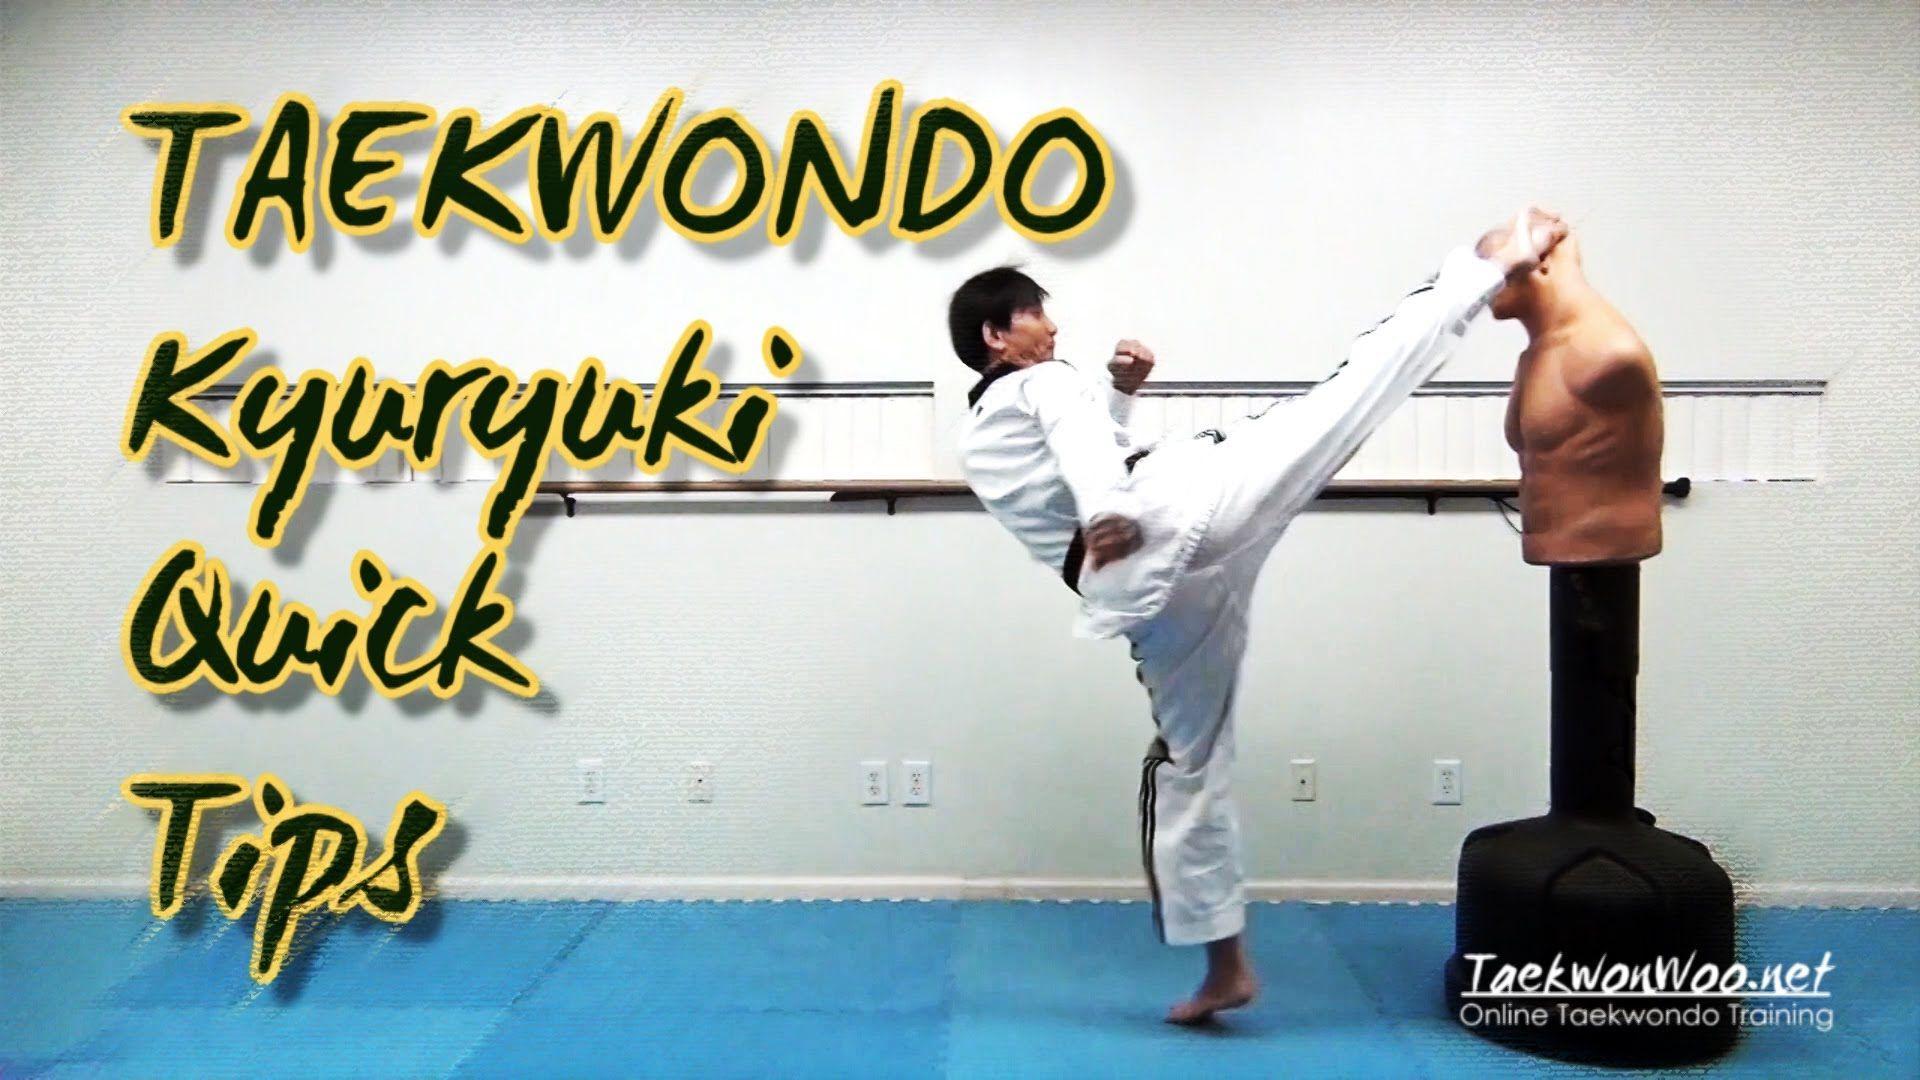 Taekwondo Sparring Quick Tip 1: How to use jab kick or cut bal